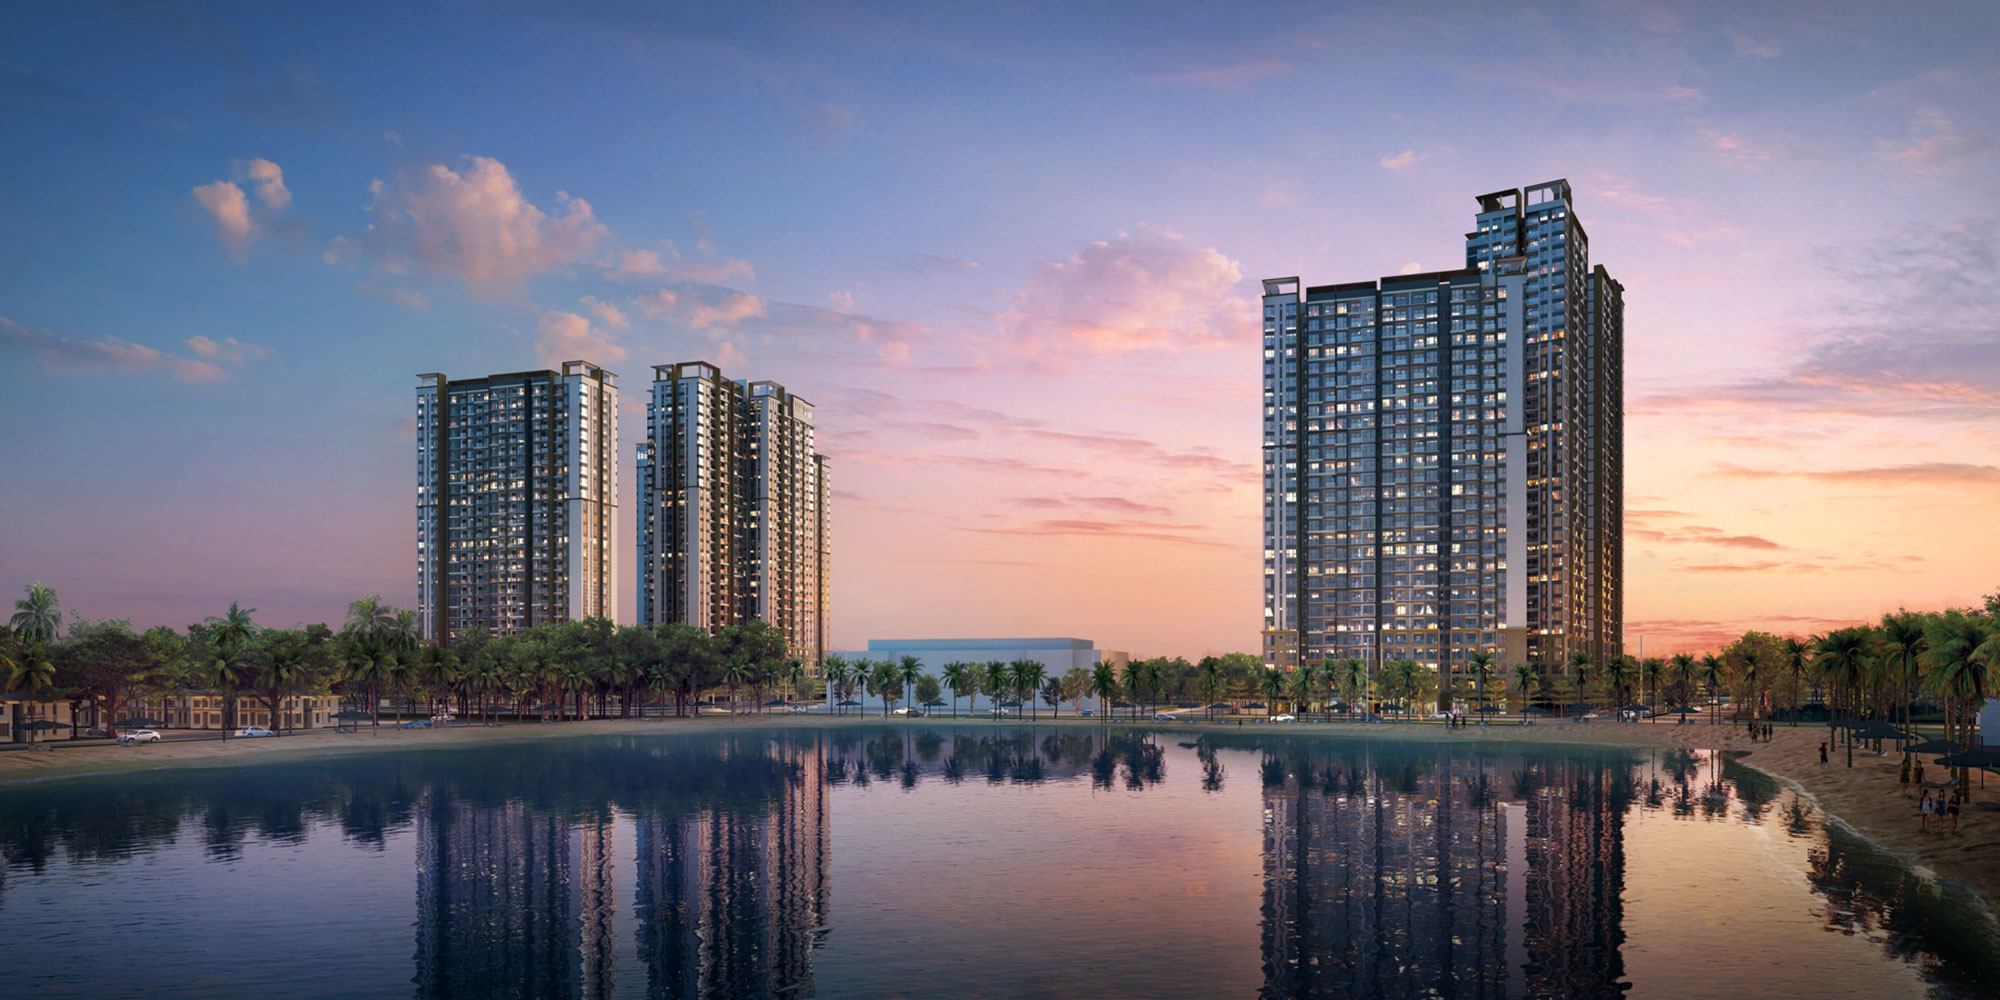 techcombank-cho-vay-mua-nha-huong-dan-vay-von-online-mua-du-an-masteri-waterfront-onehousing-4